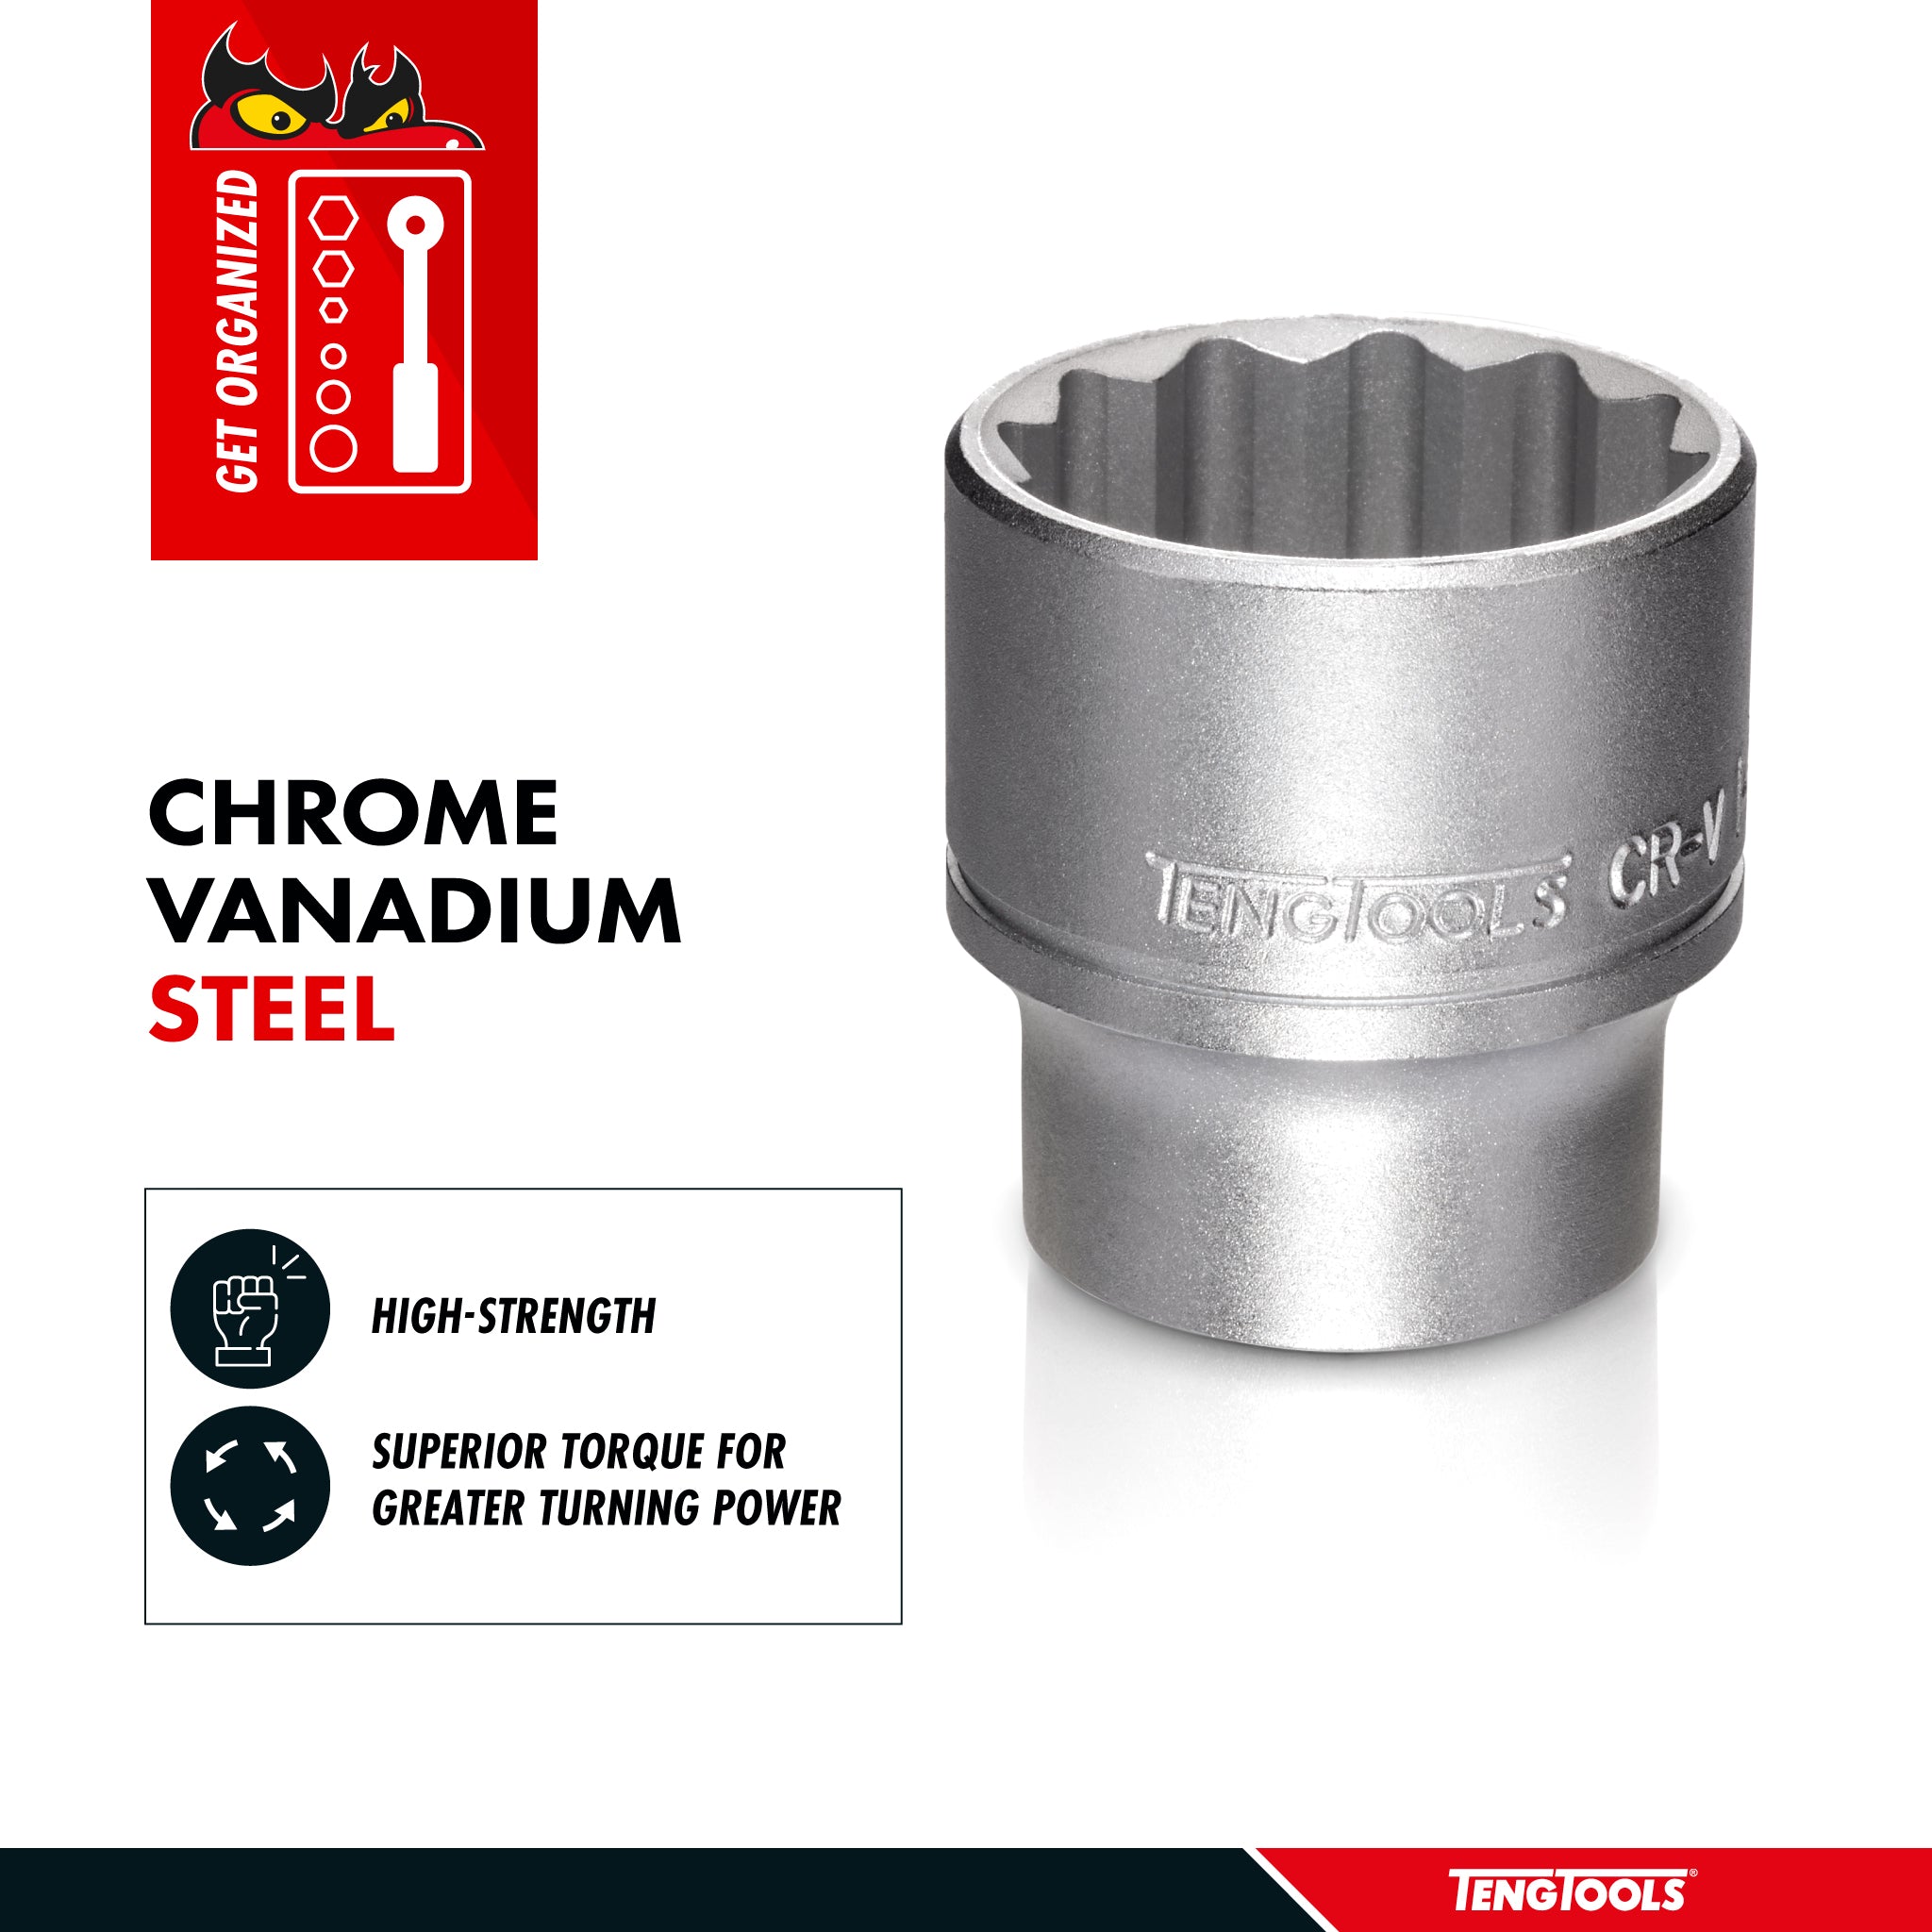 Teng Tools 1/2 Inch Drive 12 Point Metric Shallow Chrome Vanadium Sockets - 22mm